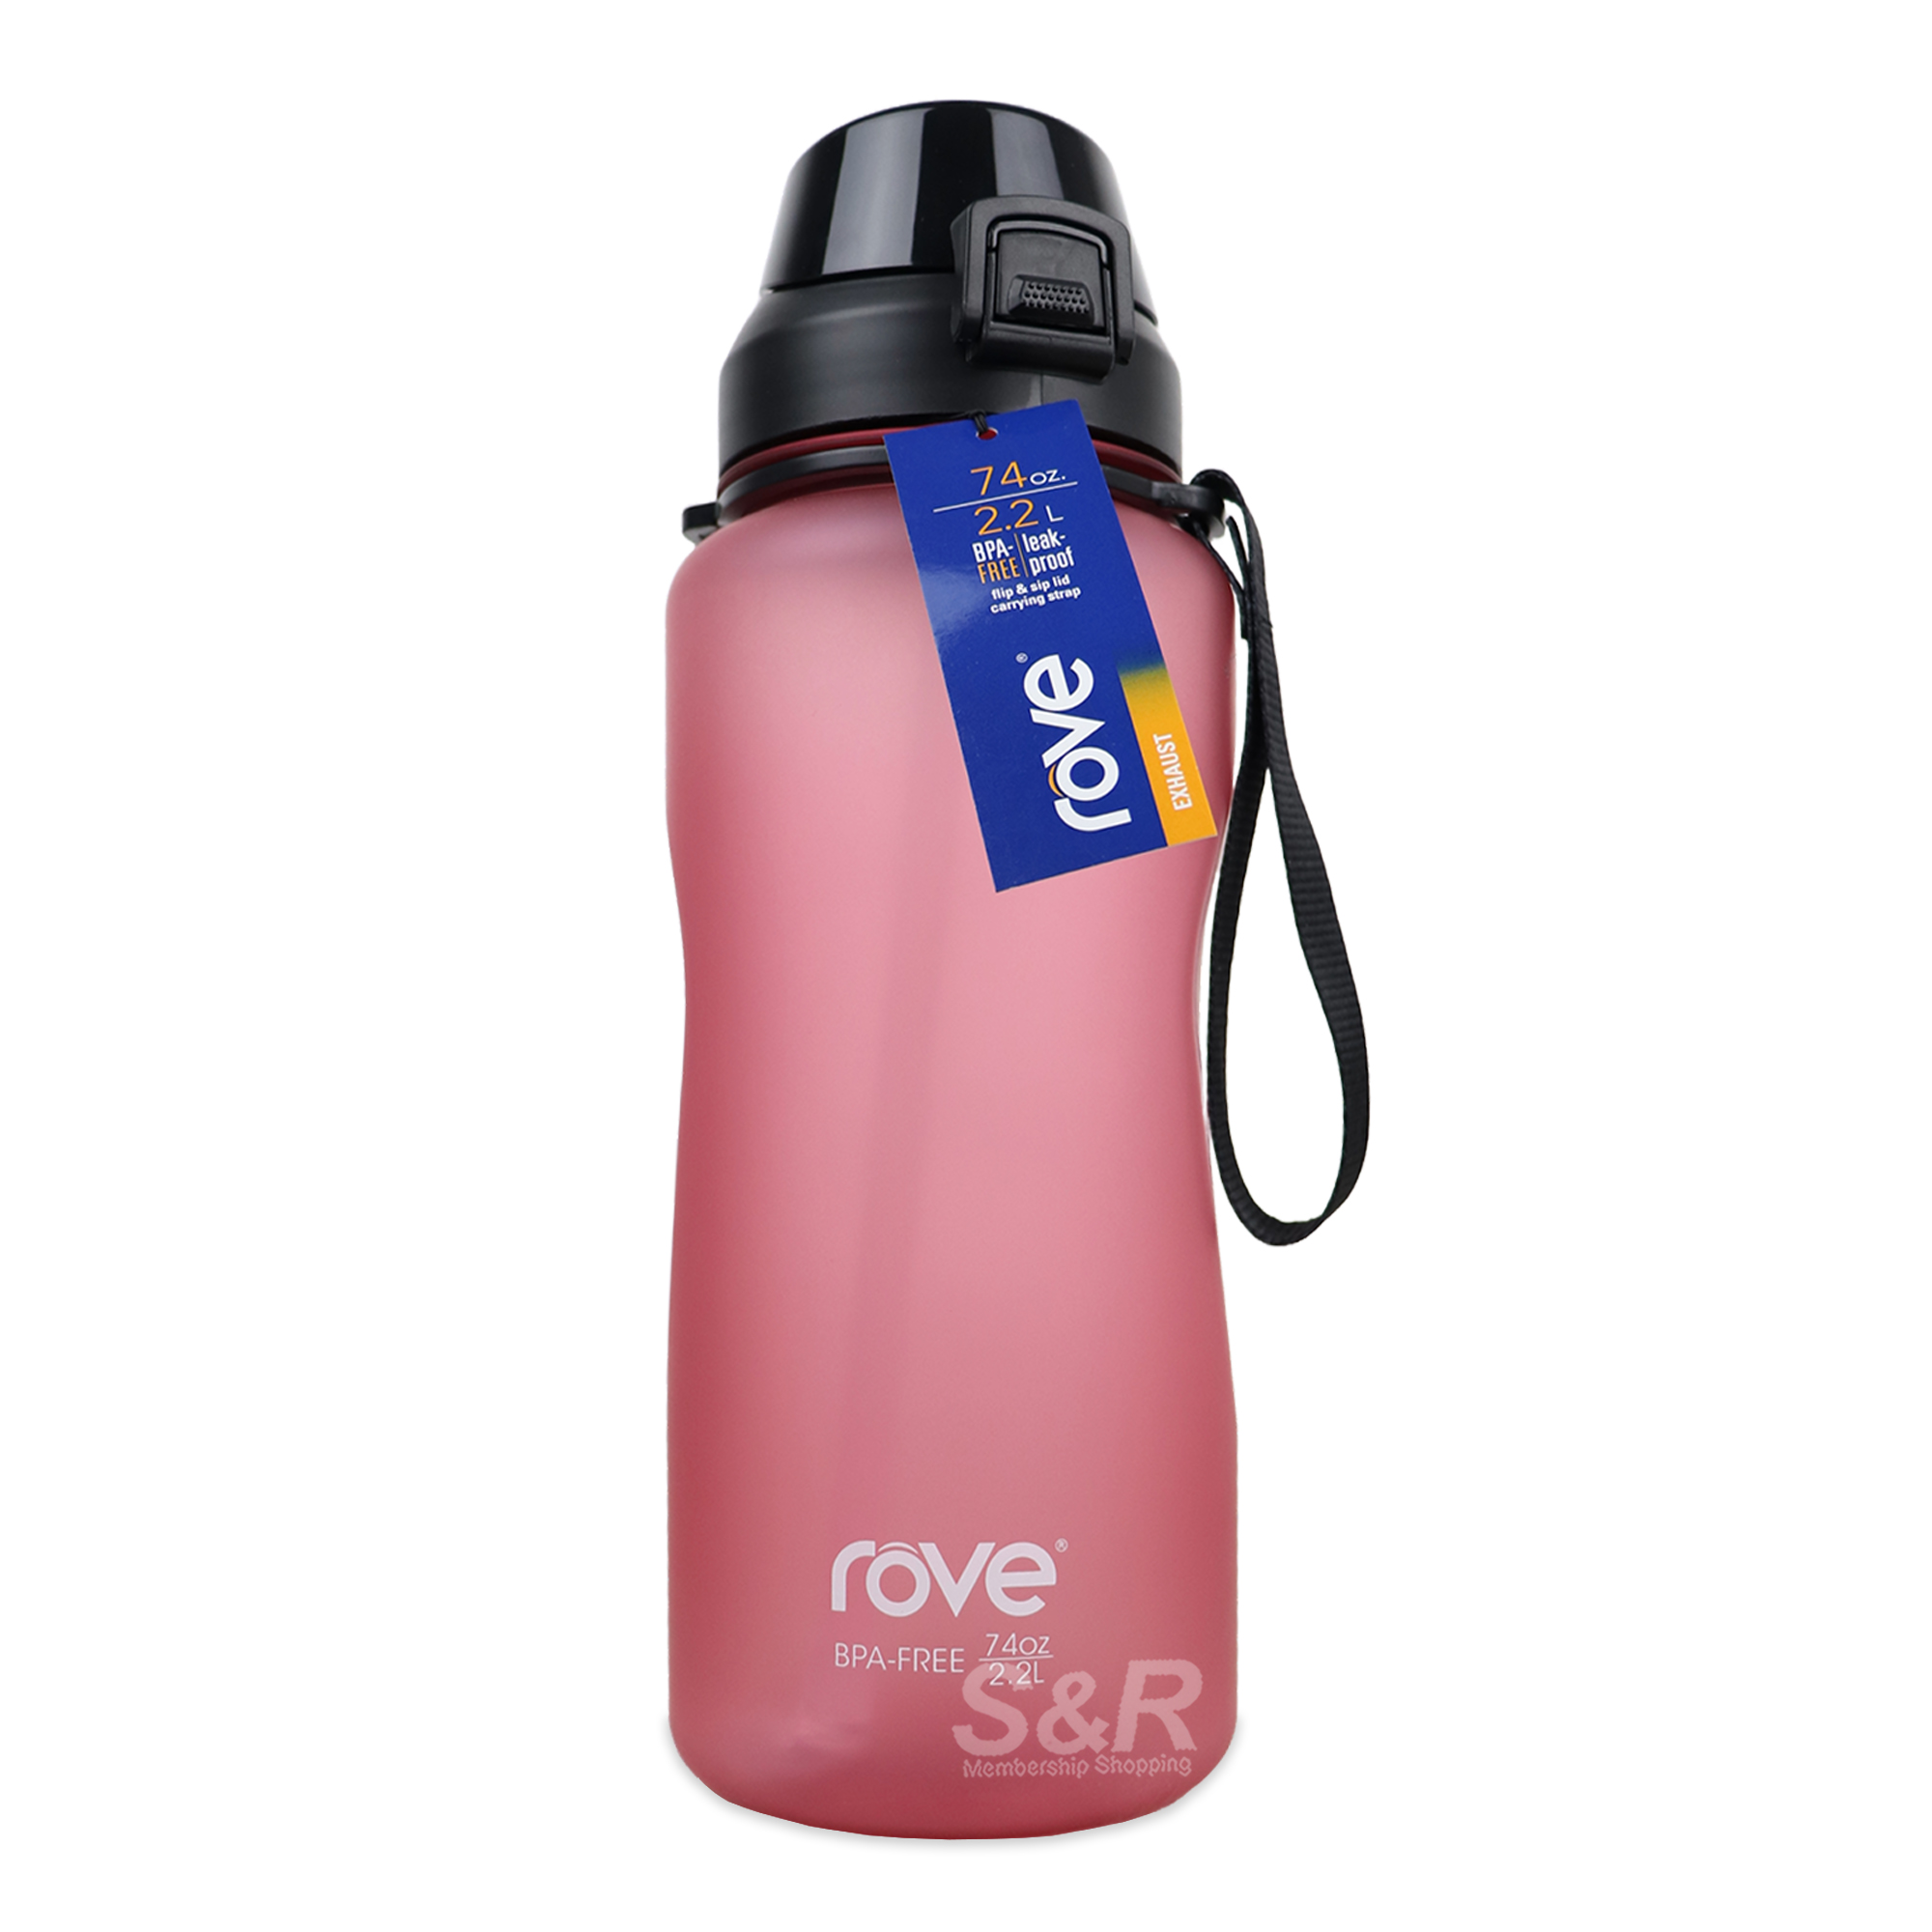 Rove Water Bottle Magenta 2.2L